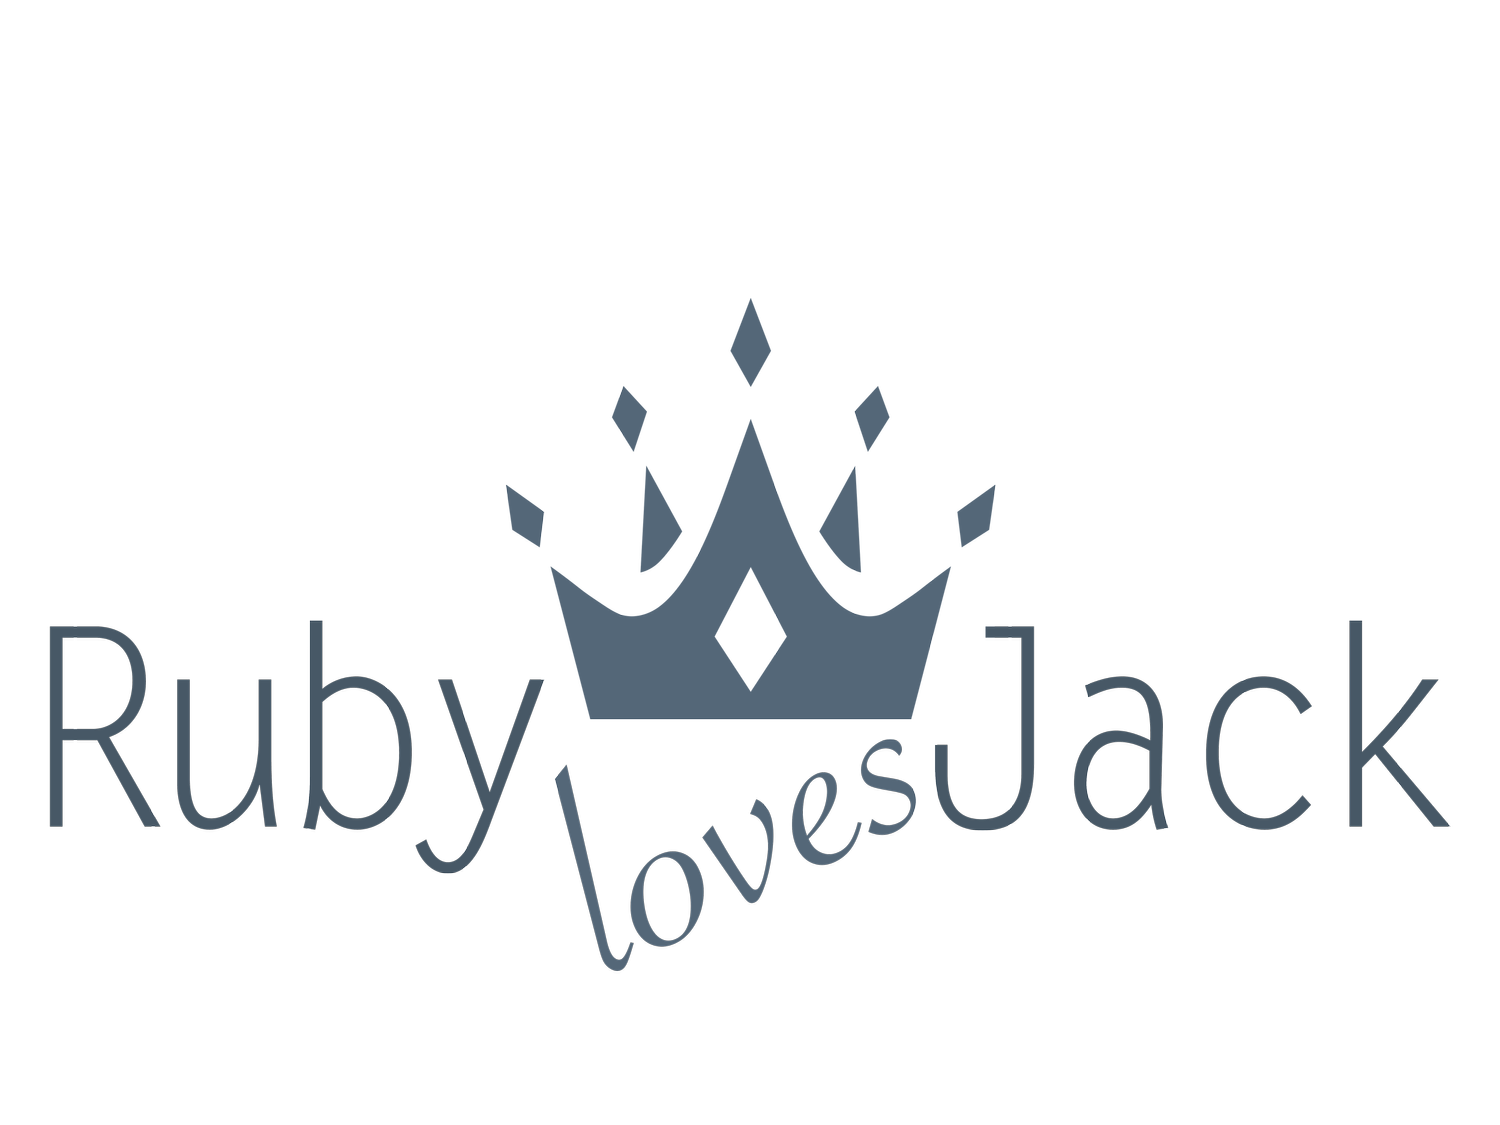 Ruby Loves Jack